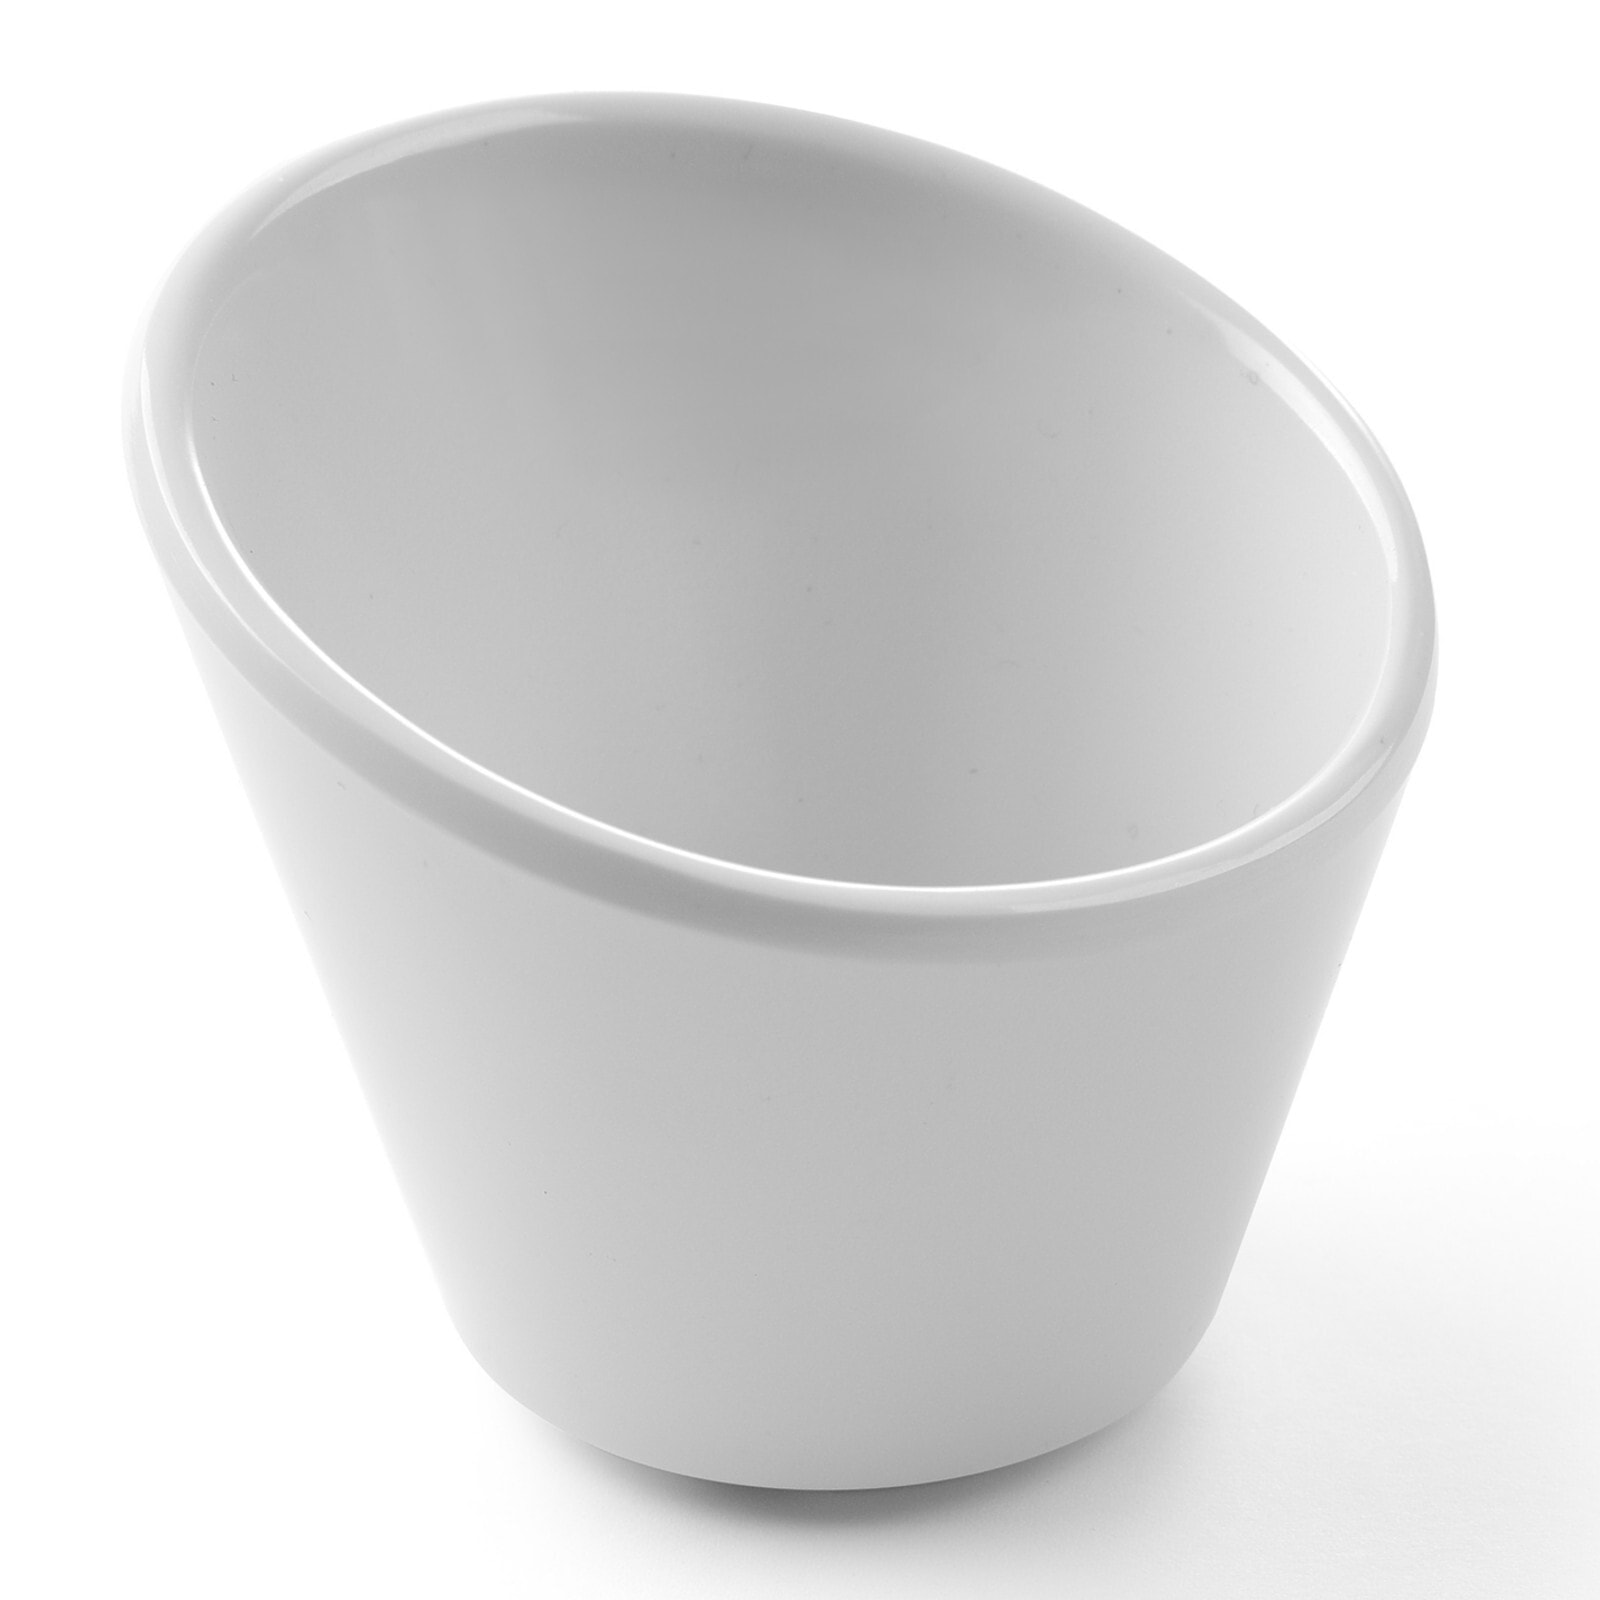 Velocity oblique bowl, height 60mm, Hendi 564578